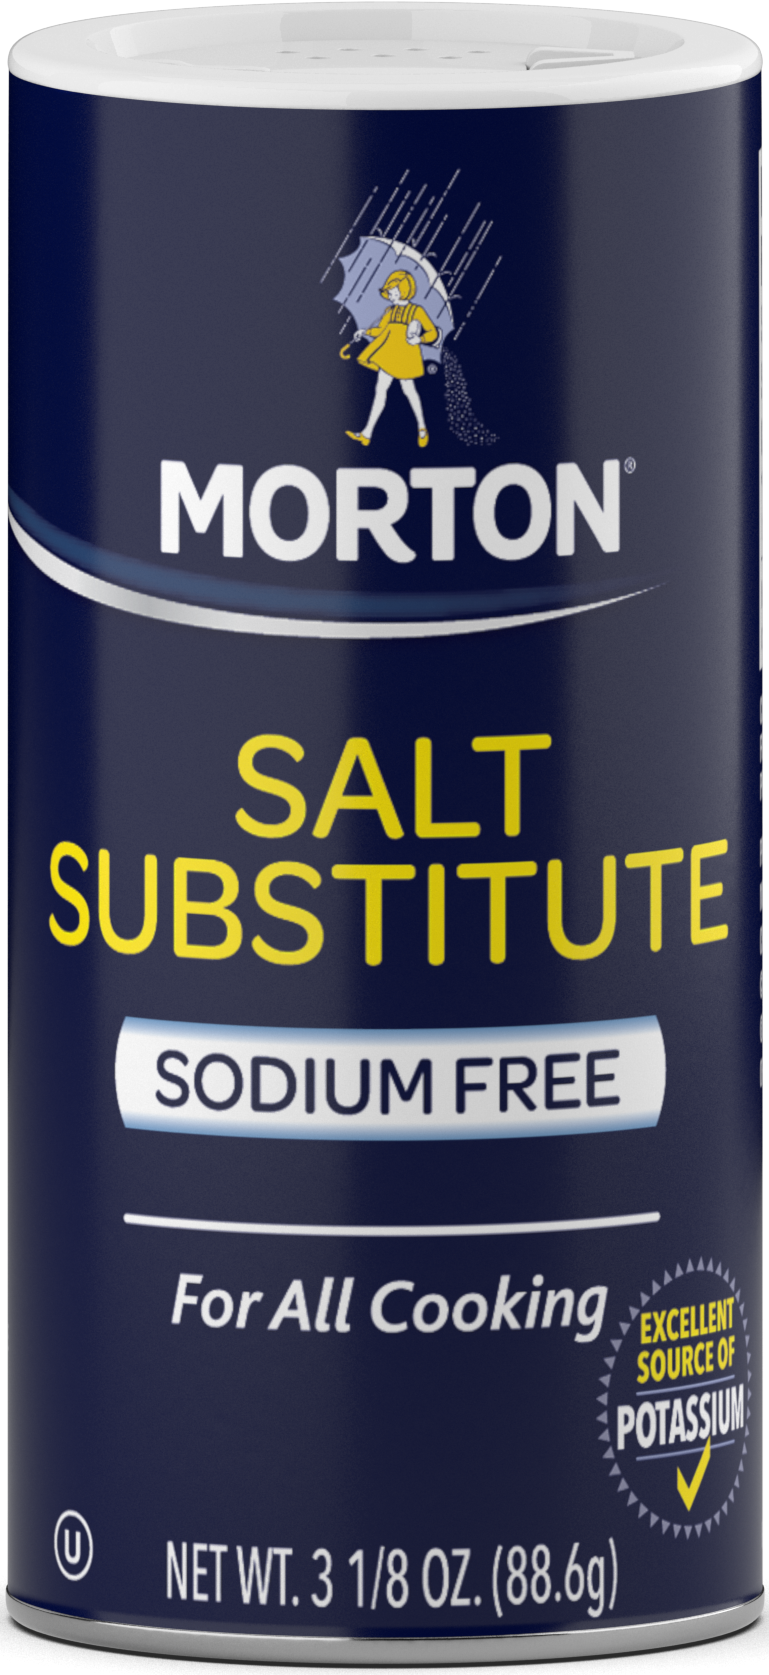 https://www.mortonsalt.com/wp-content/uploads/morton-salt-substitute-4.png